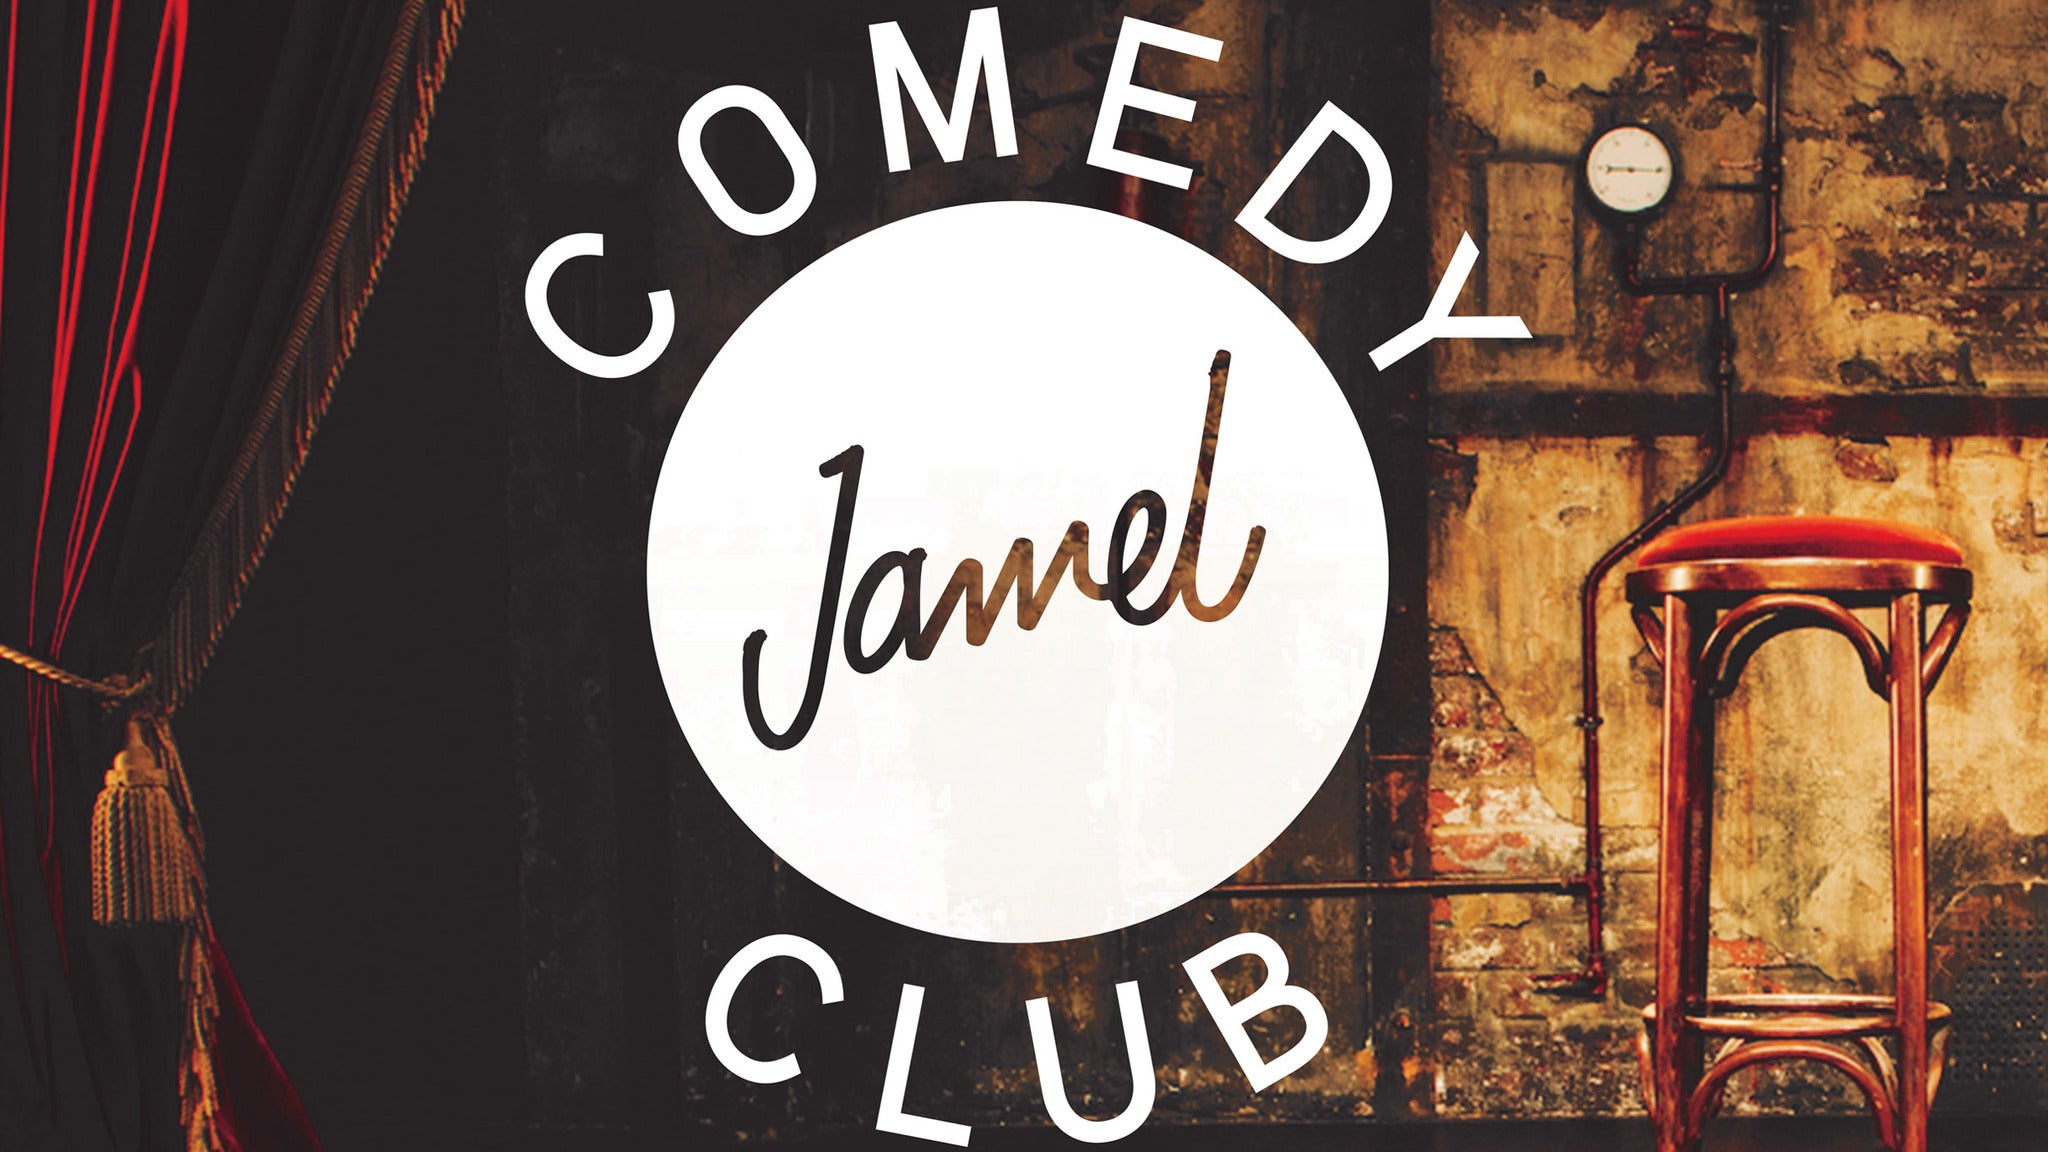 La Troupe du Jamel Comedy Club